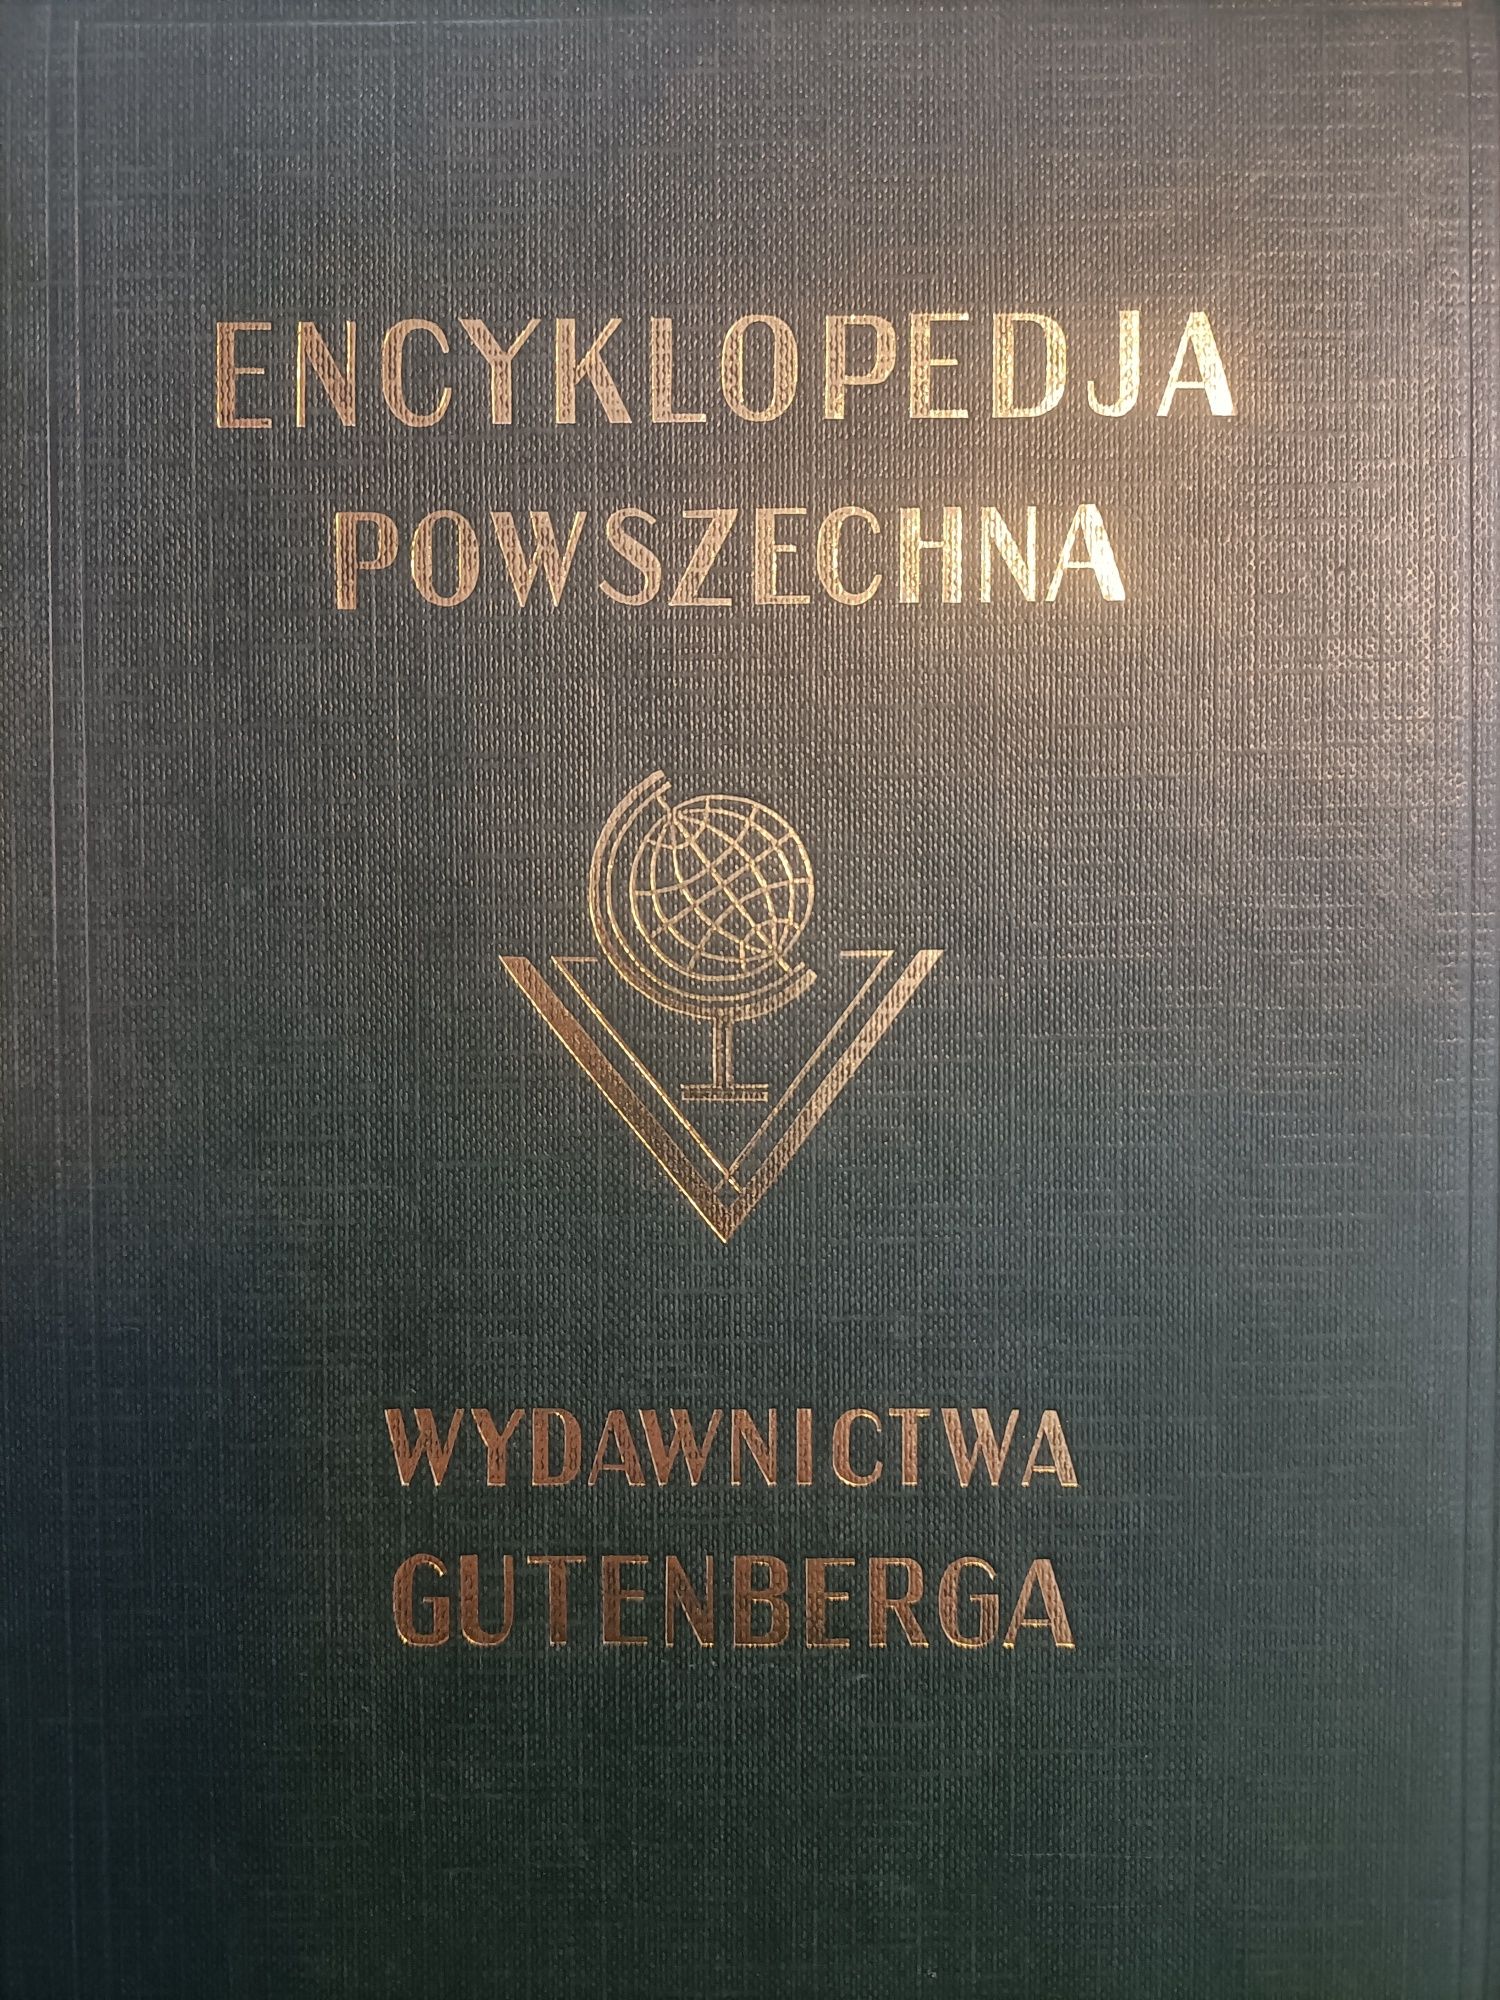 Wielka Encyklopedia Powszechna Gutenberga 22+1 tomów